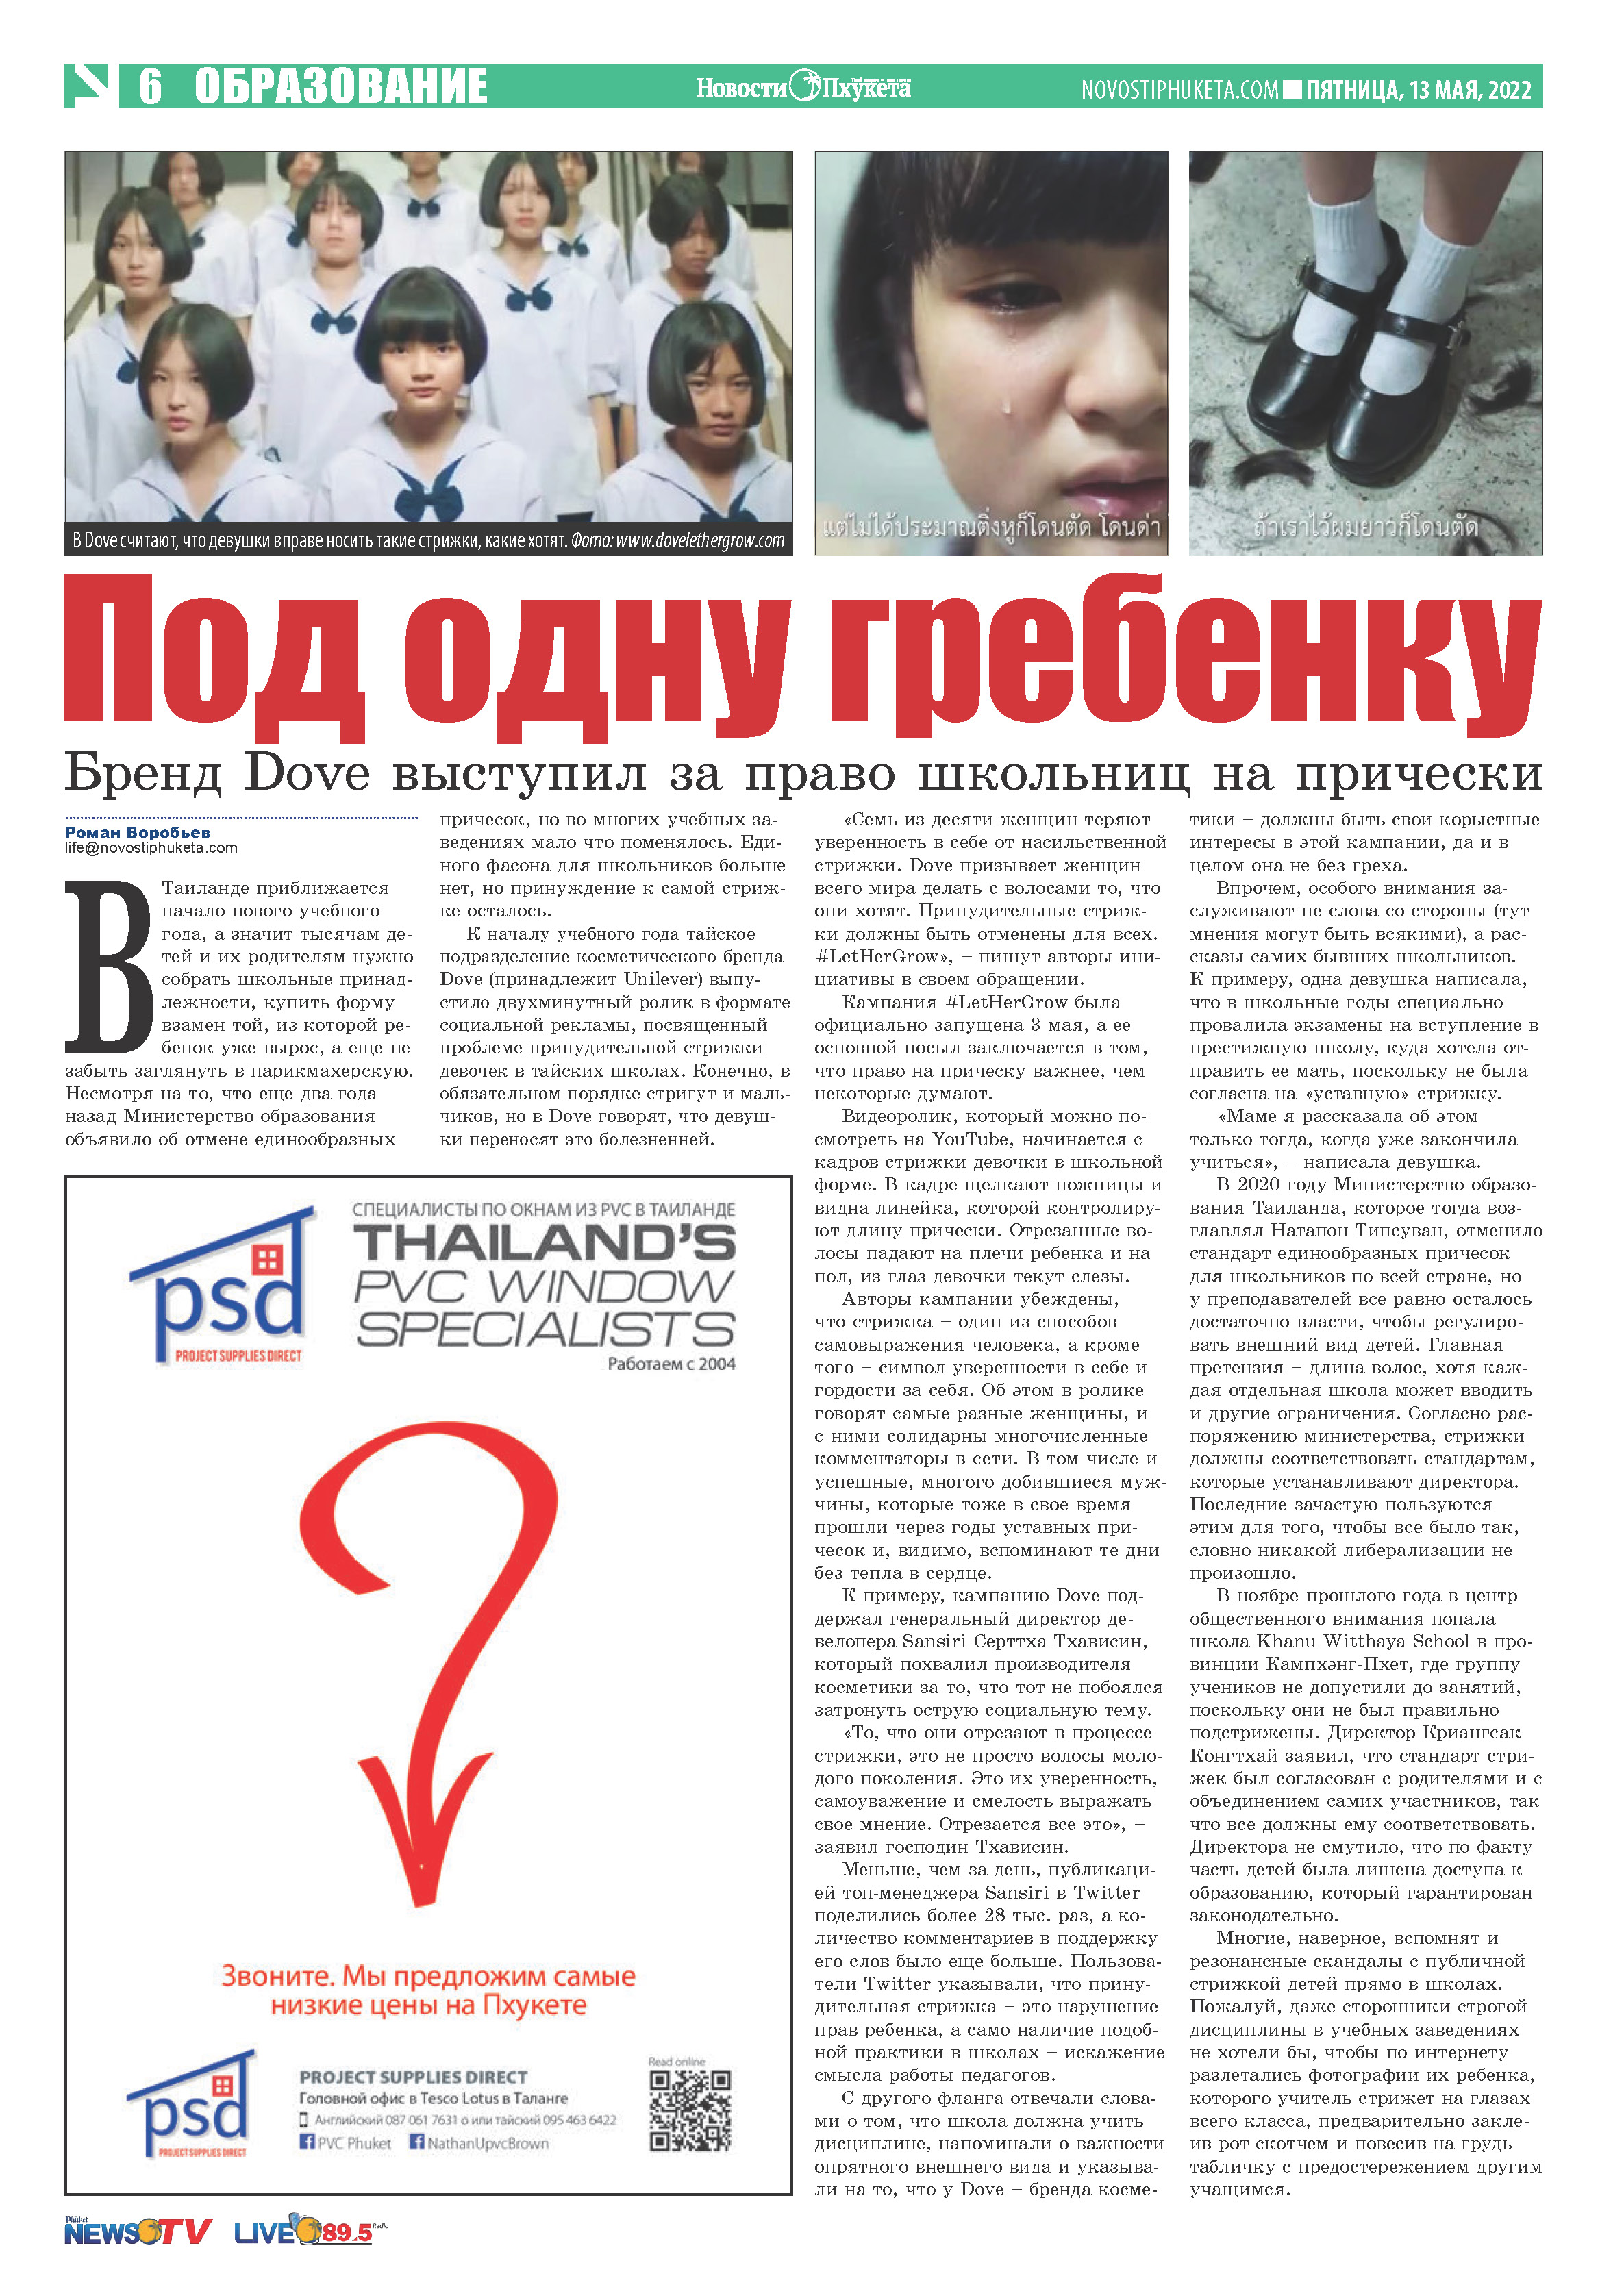 Phuket Newspaper - https://www.novostiphuketa.com/archive/13-05-2022/13-05-2022_Page_06.jpg